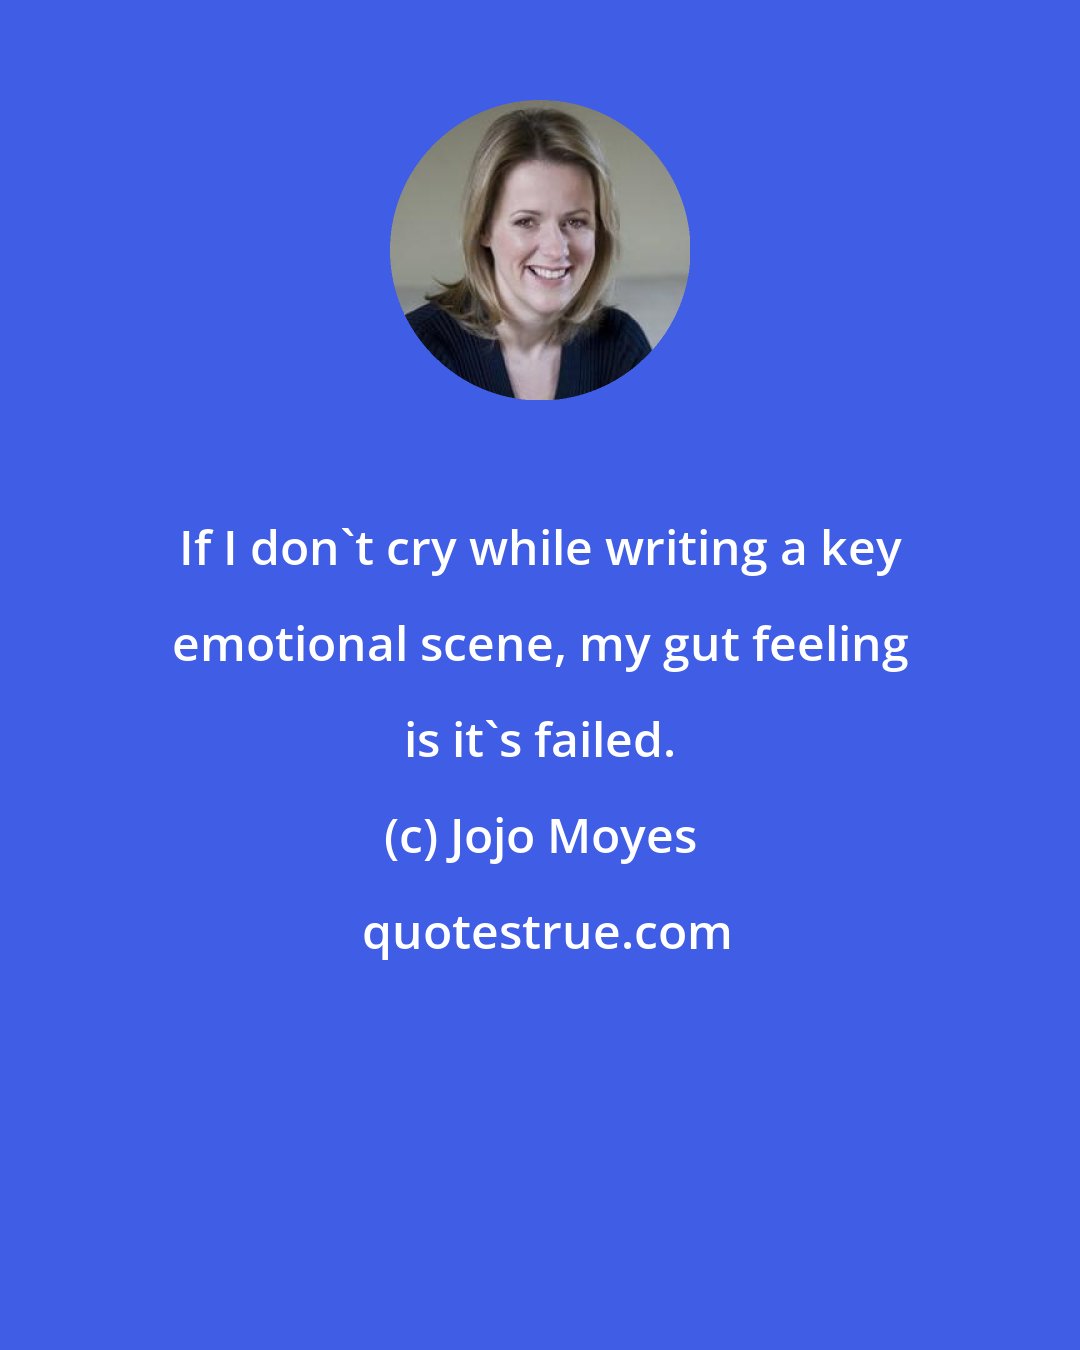 Jojo Moyes: If I don't cry while writing a key emotional scene, my gut feeling is it's failed.